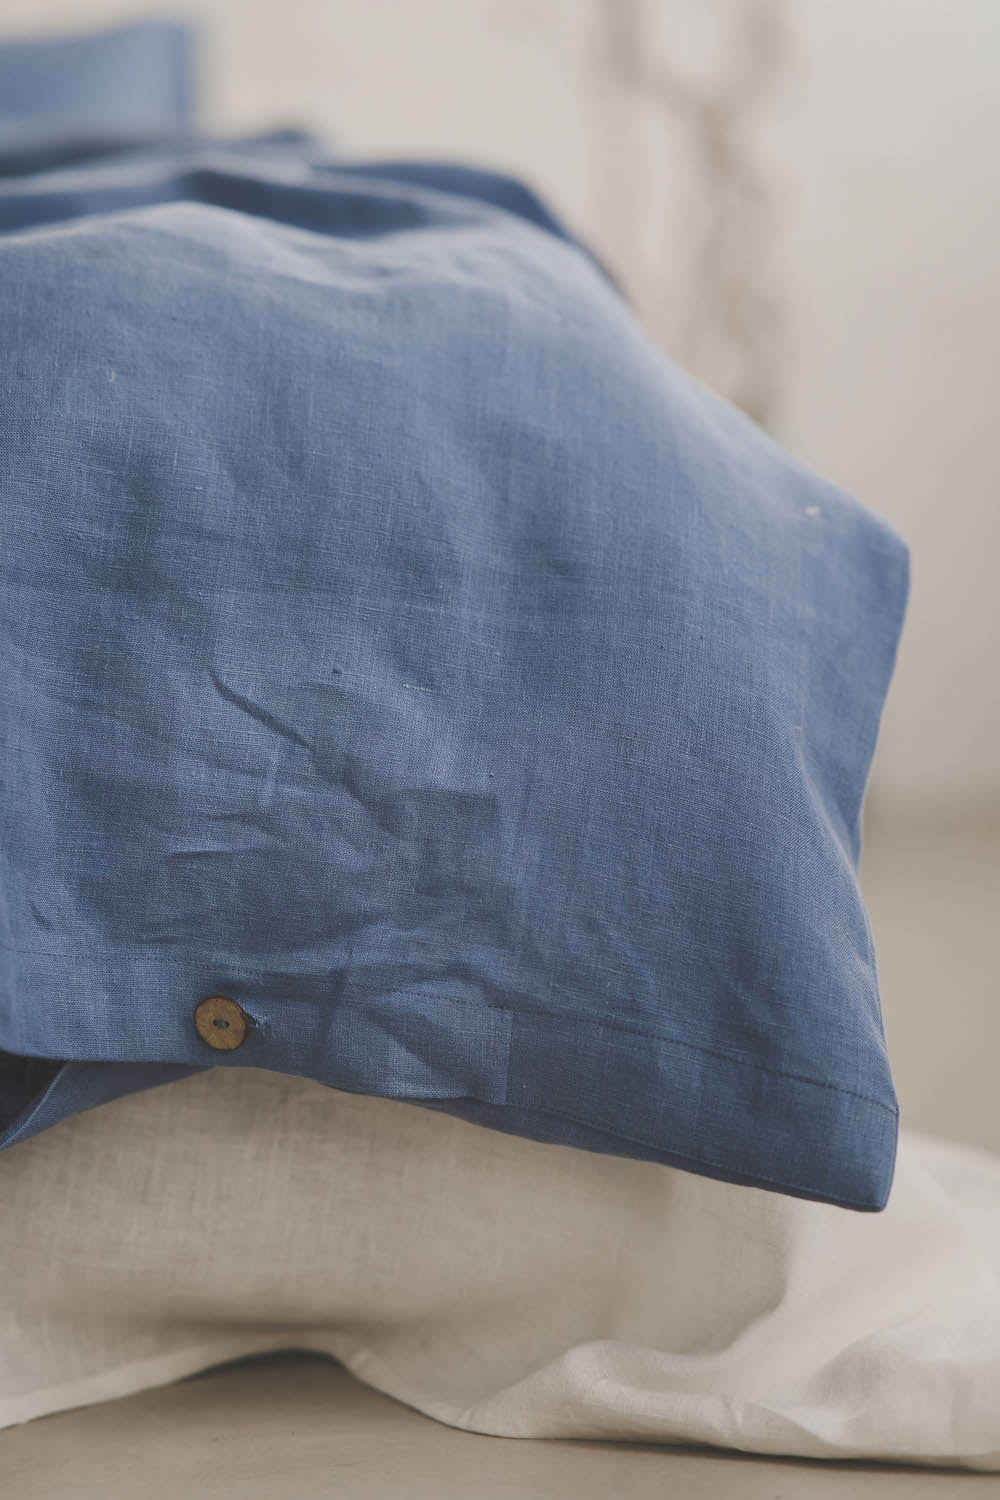 Denim blue linen duvet cover with buttons